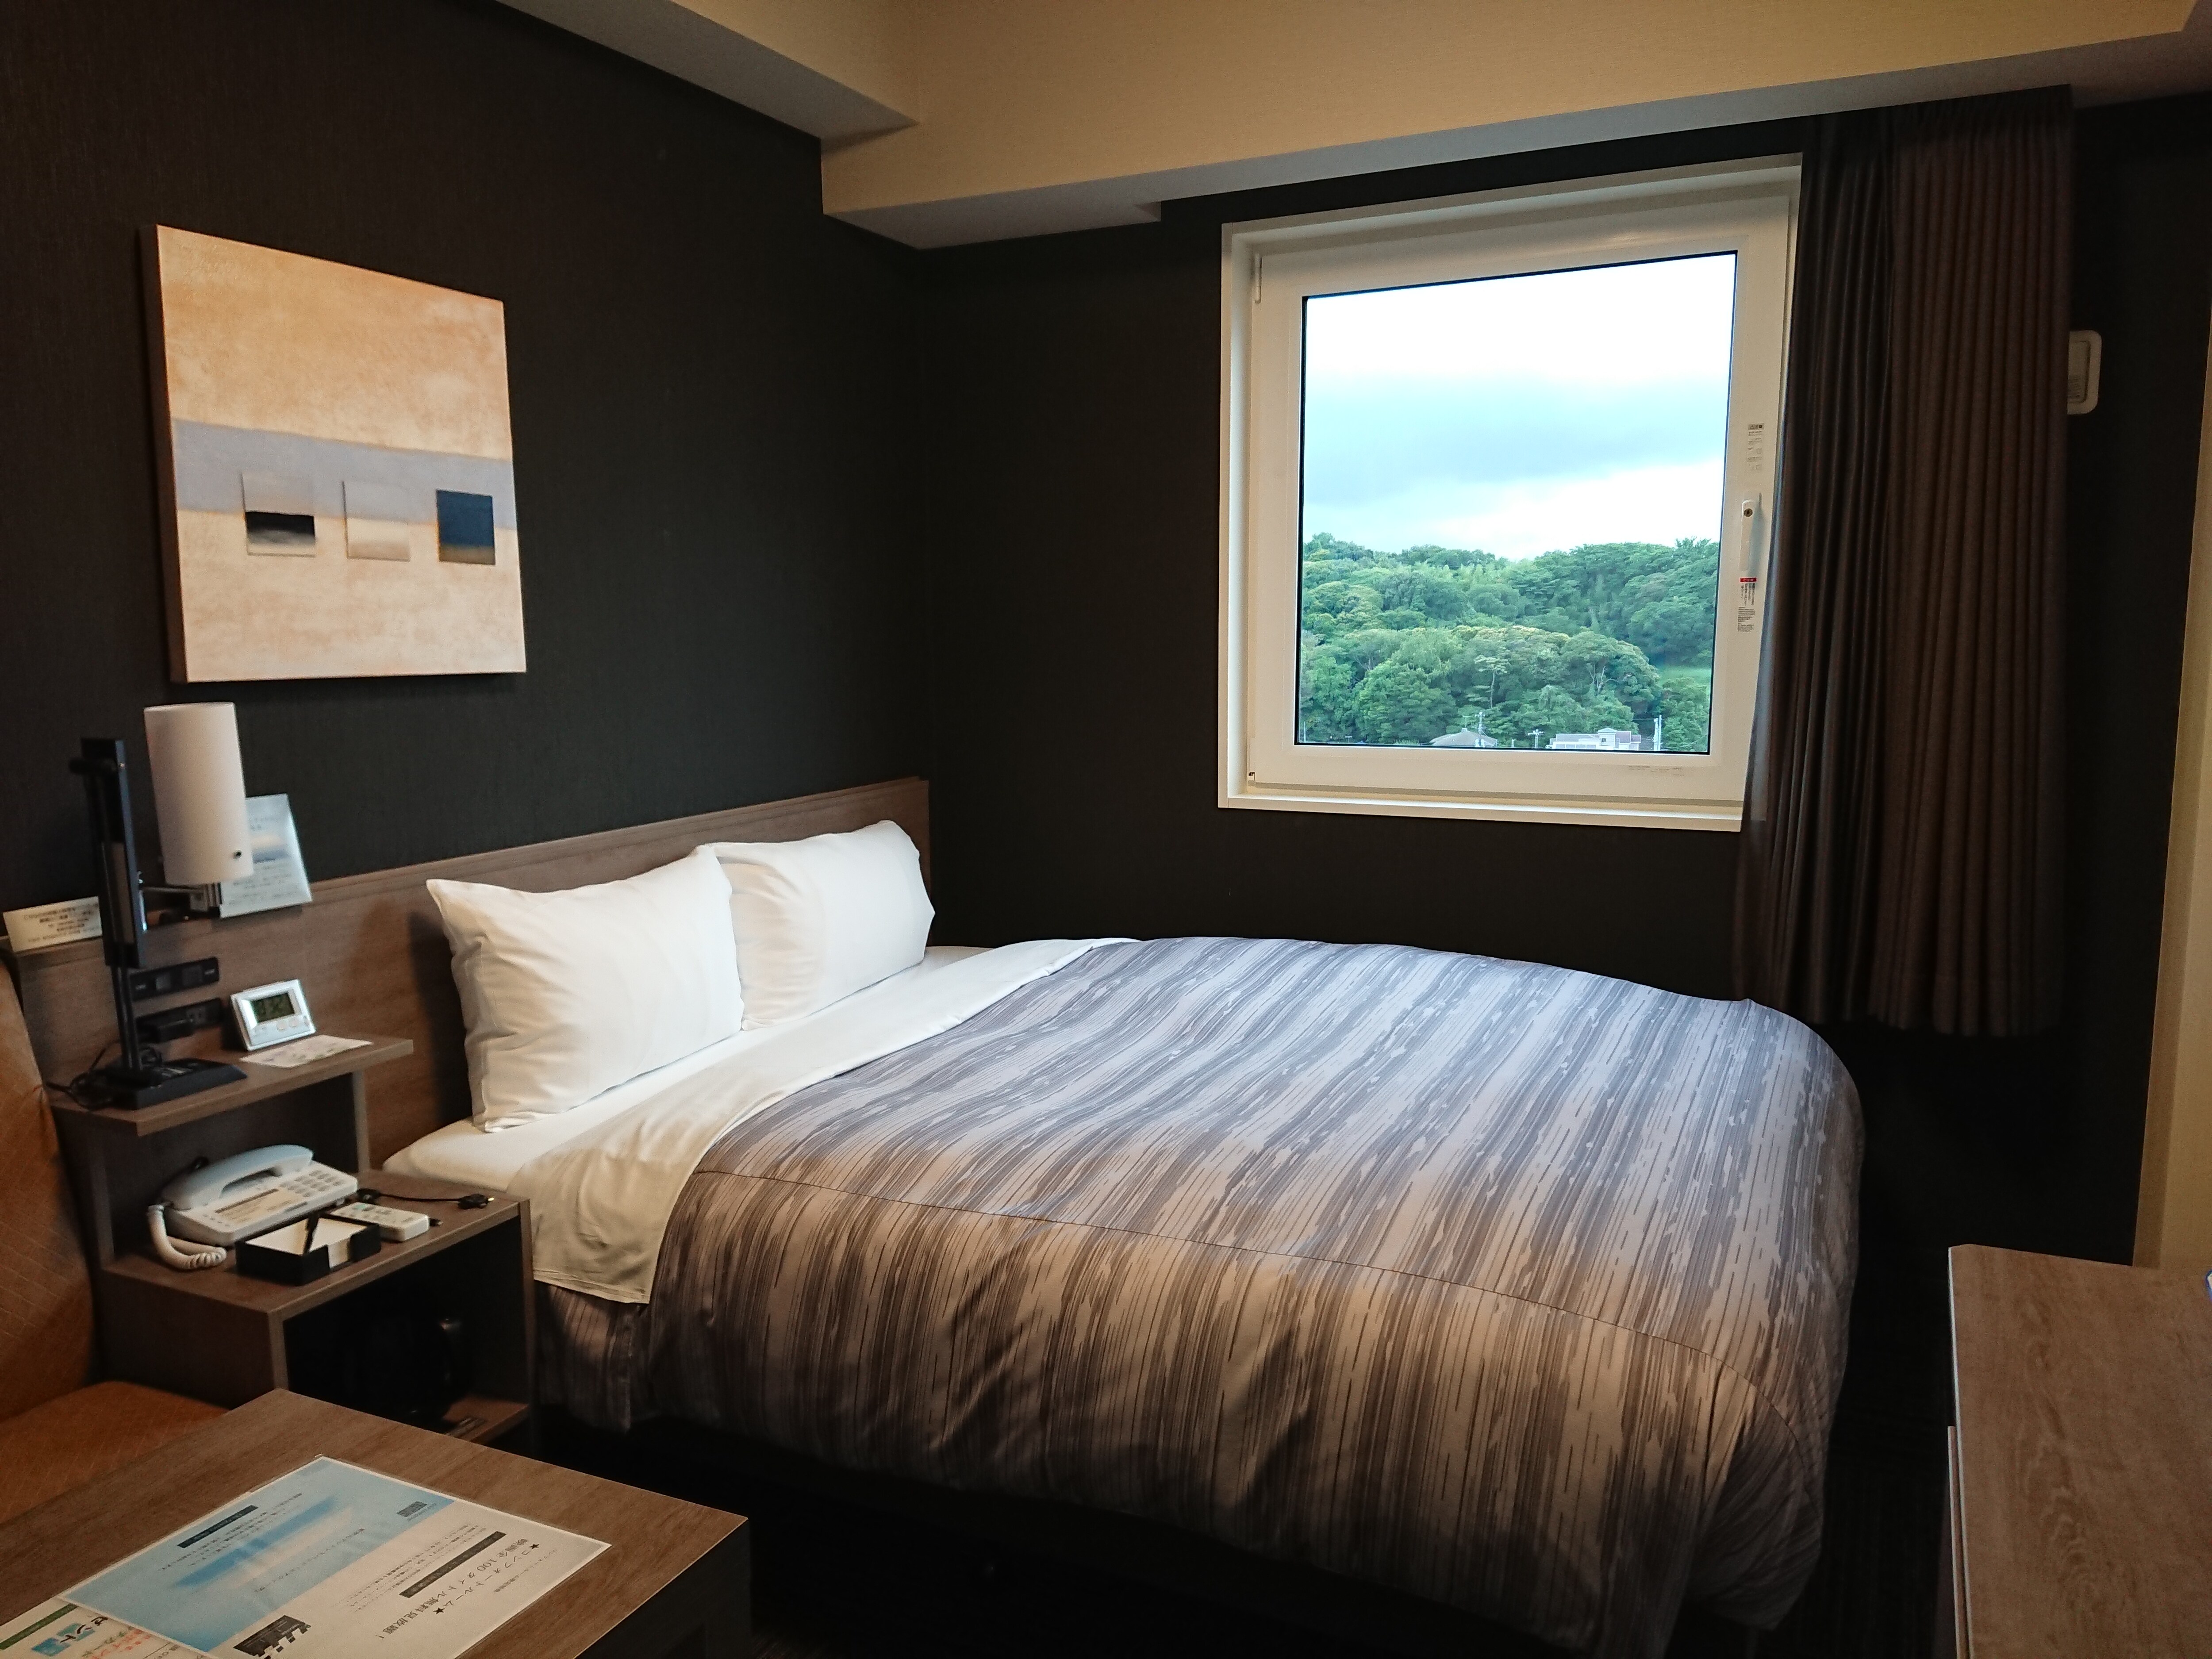 [Guest room] Comfort double room 14 square meters, bed width 160 cm